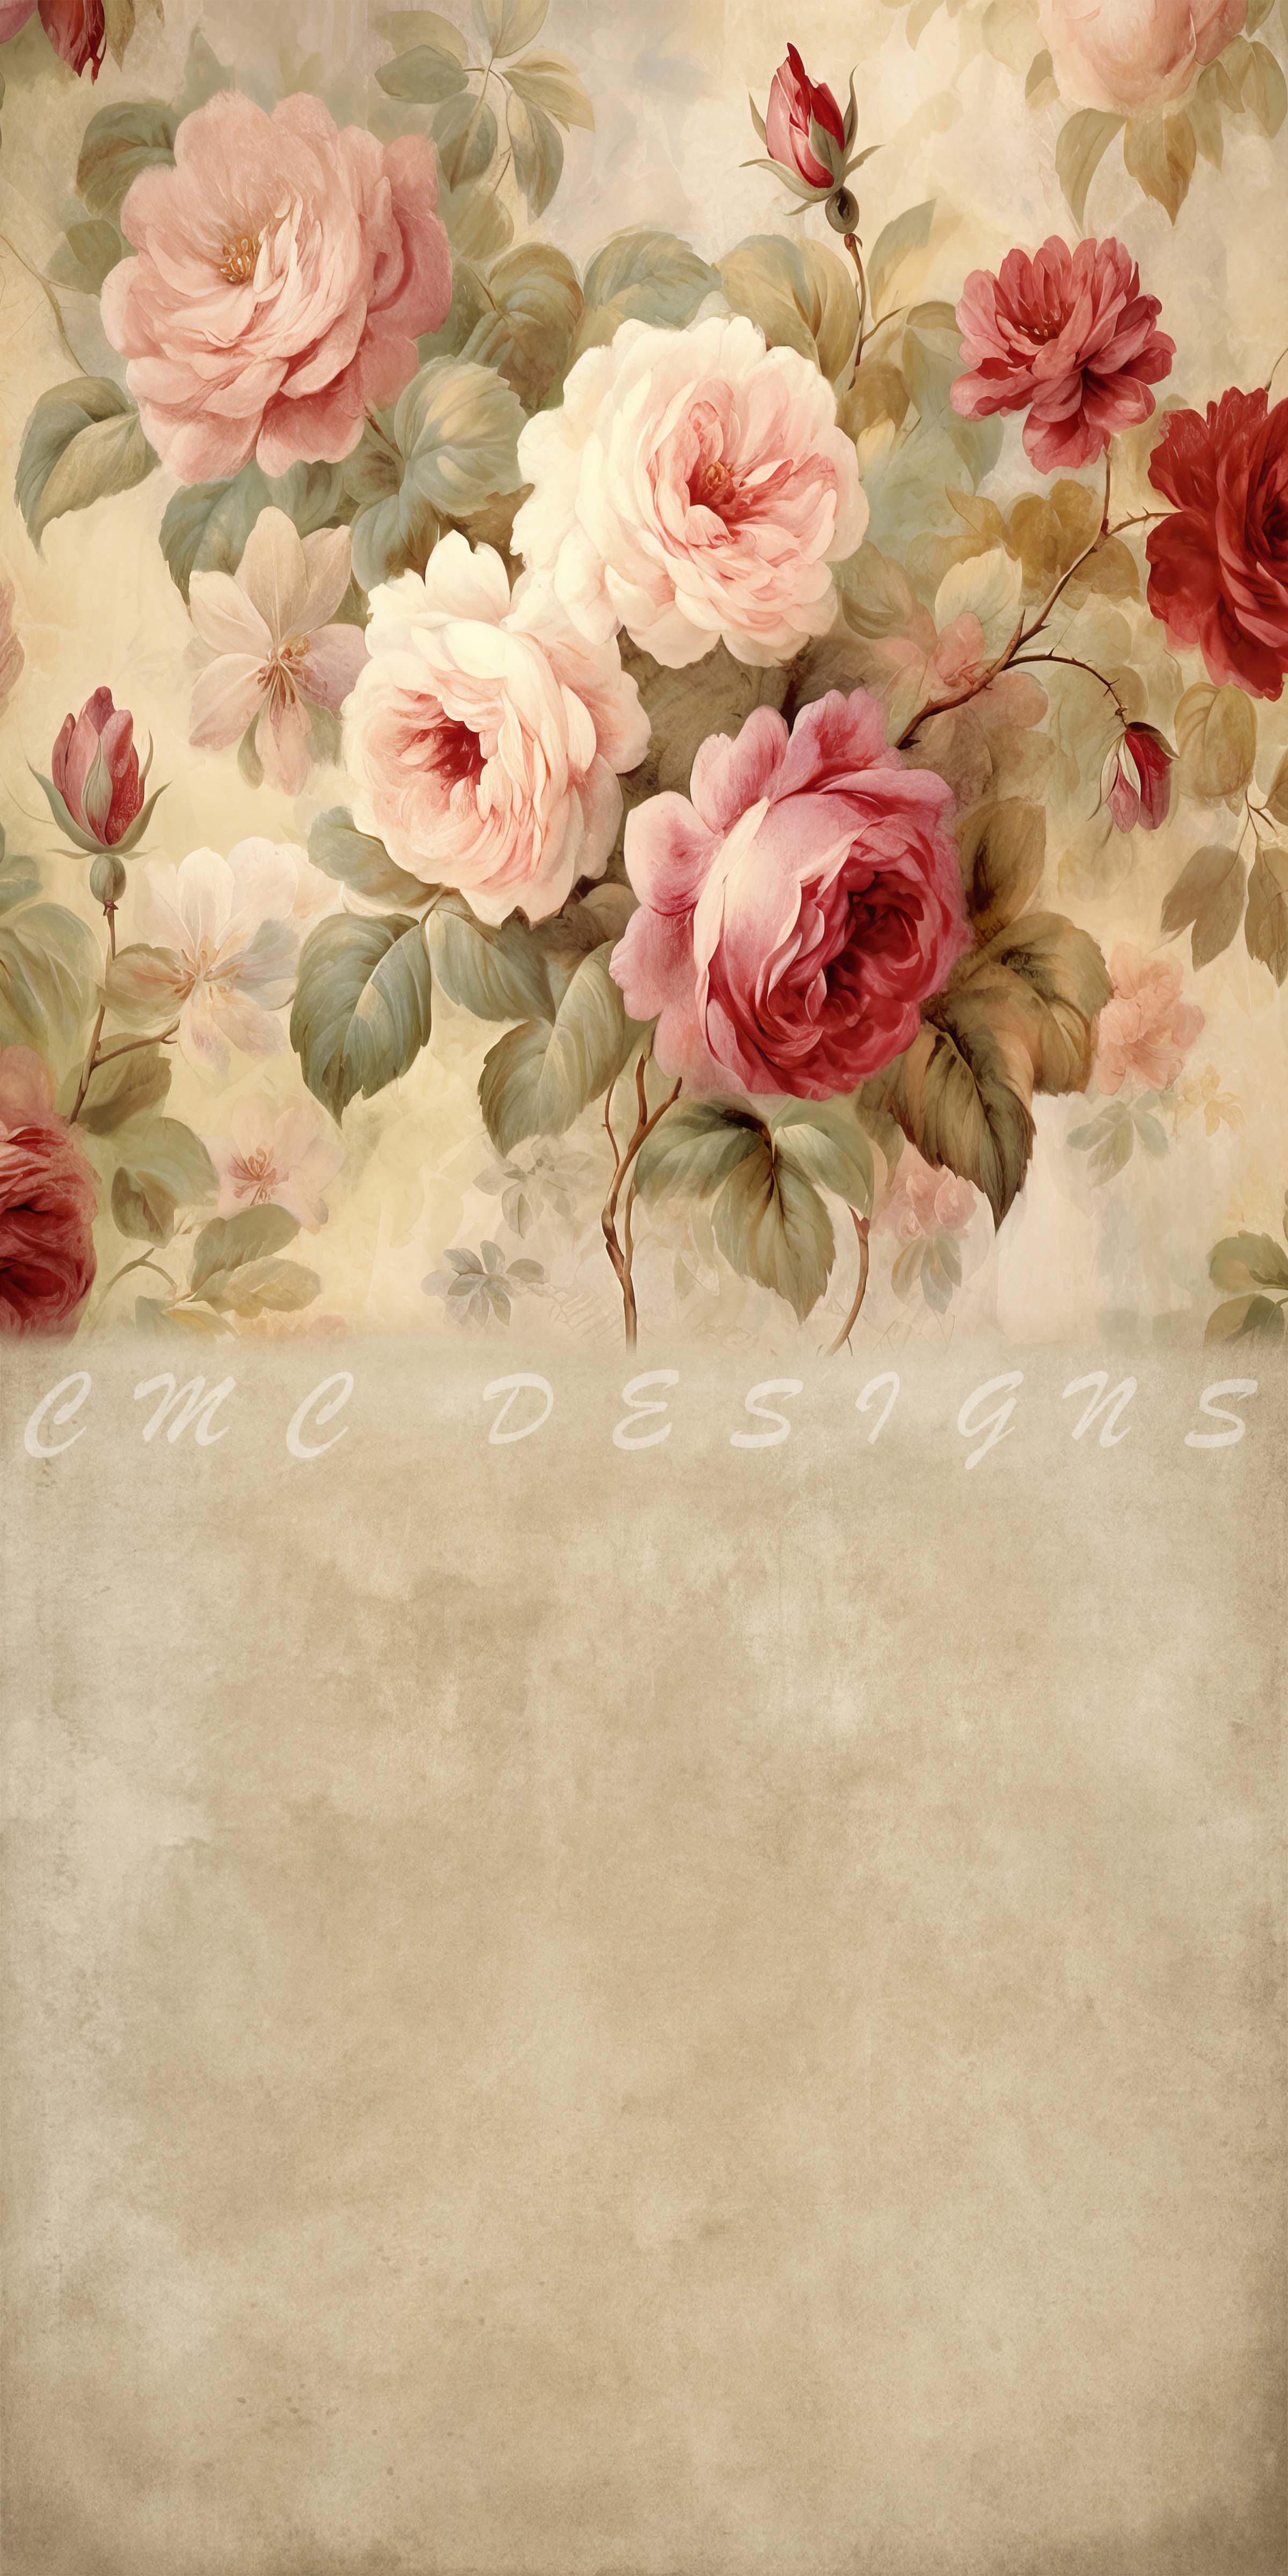 Kate Sweep Fine Art Vintage Rose Backdrop Designed by Candice Compton